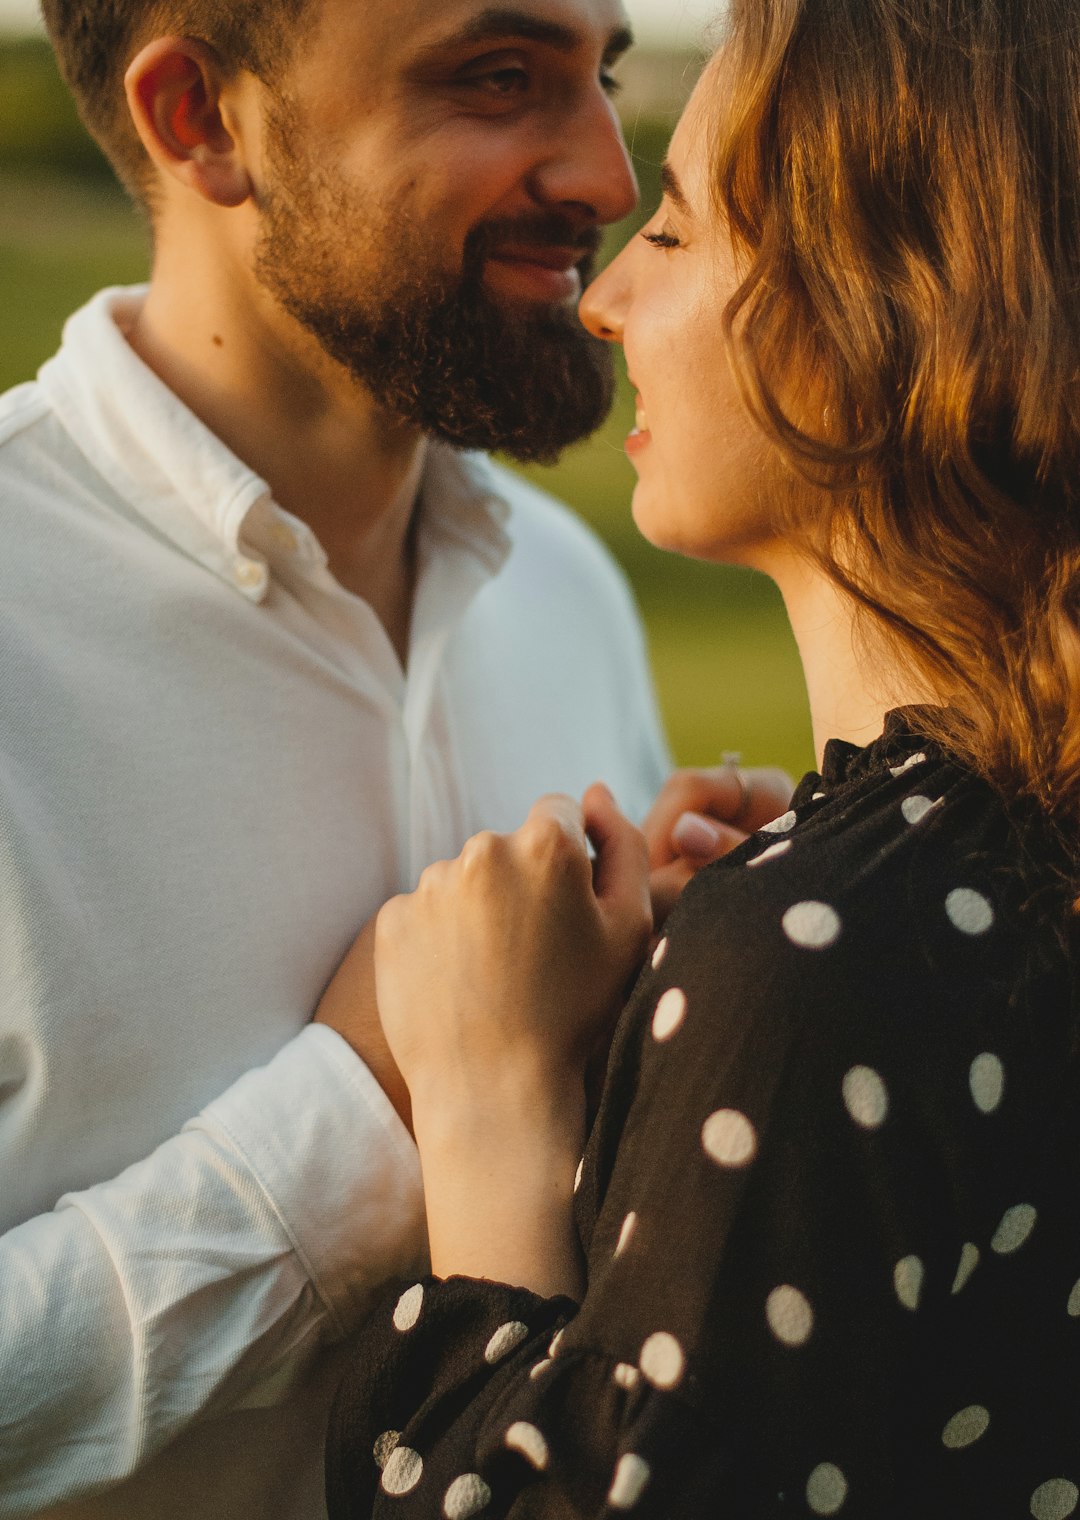 man in white dress shirt kissing woman in black and white polka dot dress